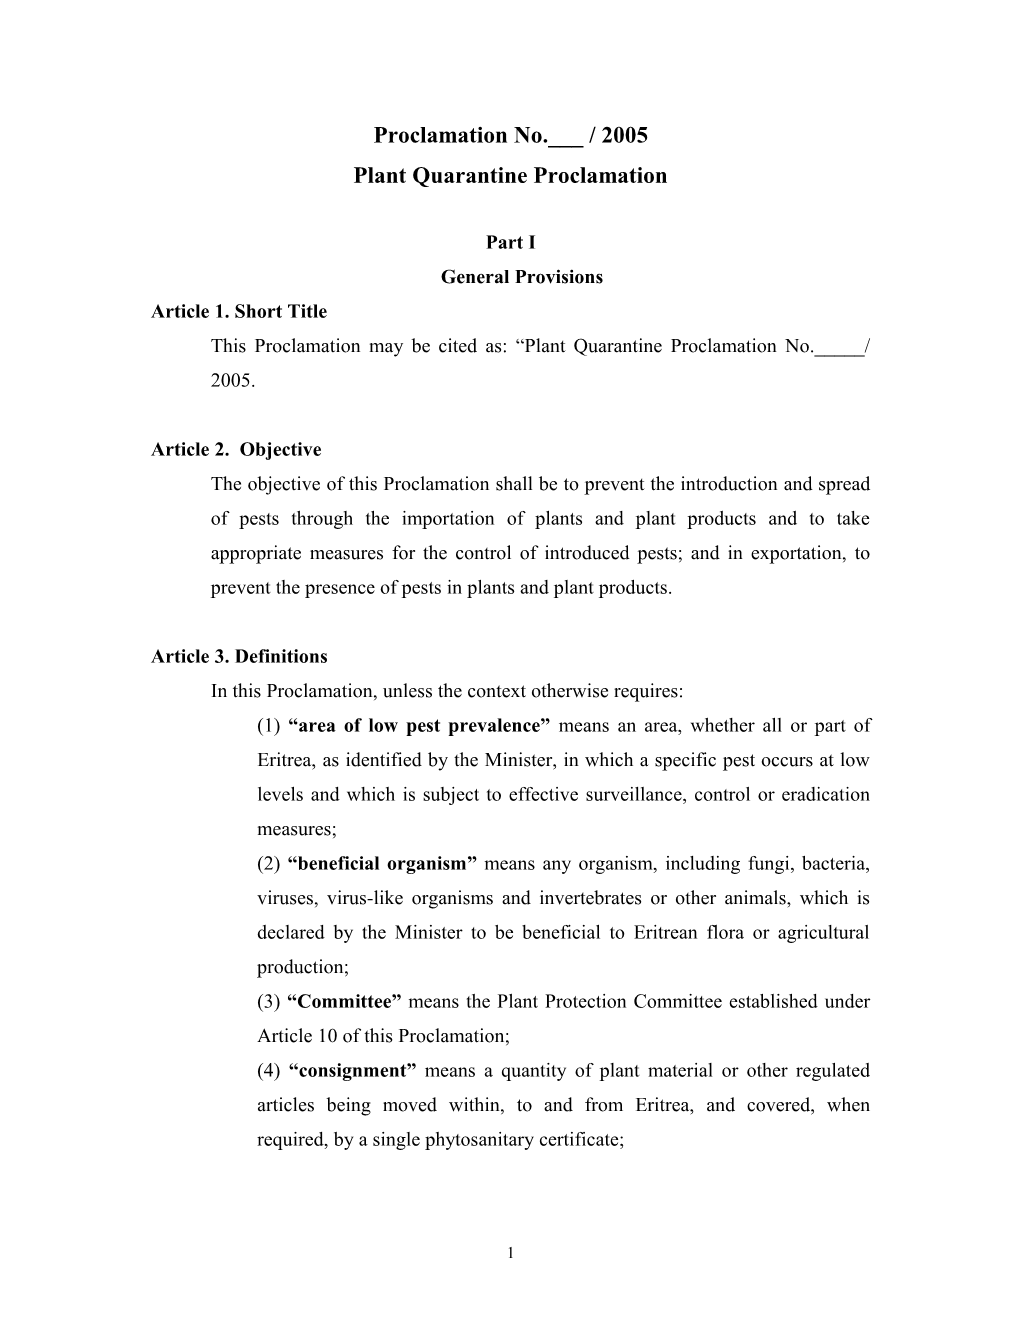 Plant Quarantine Proclamation